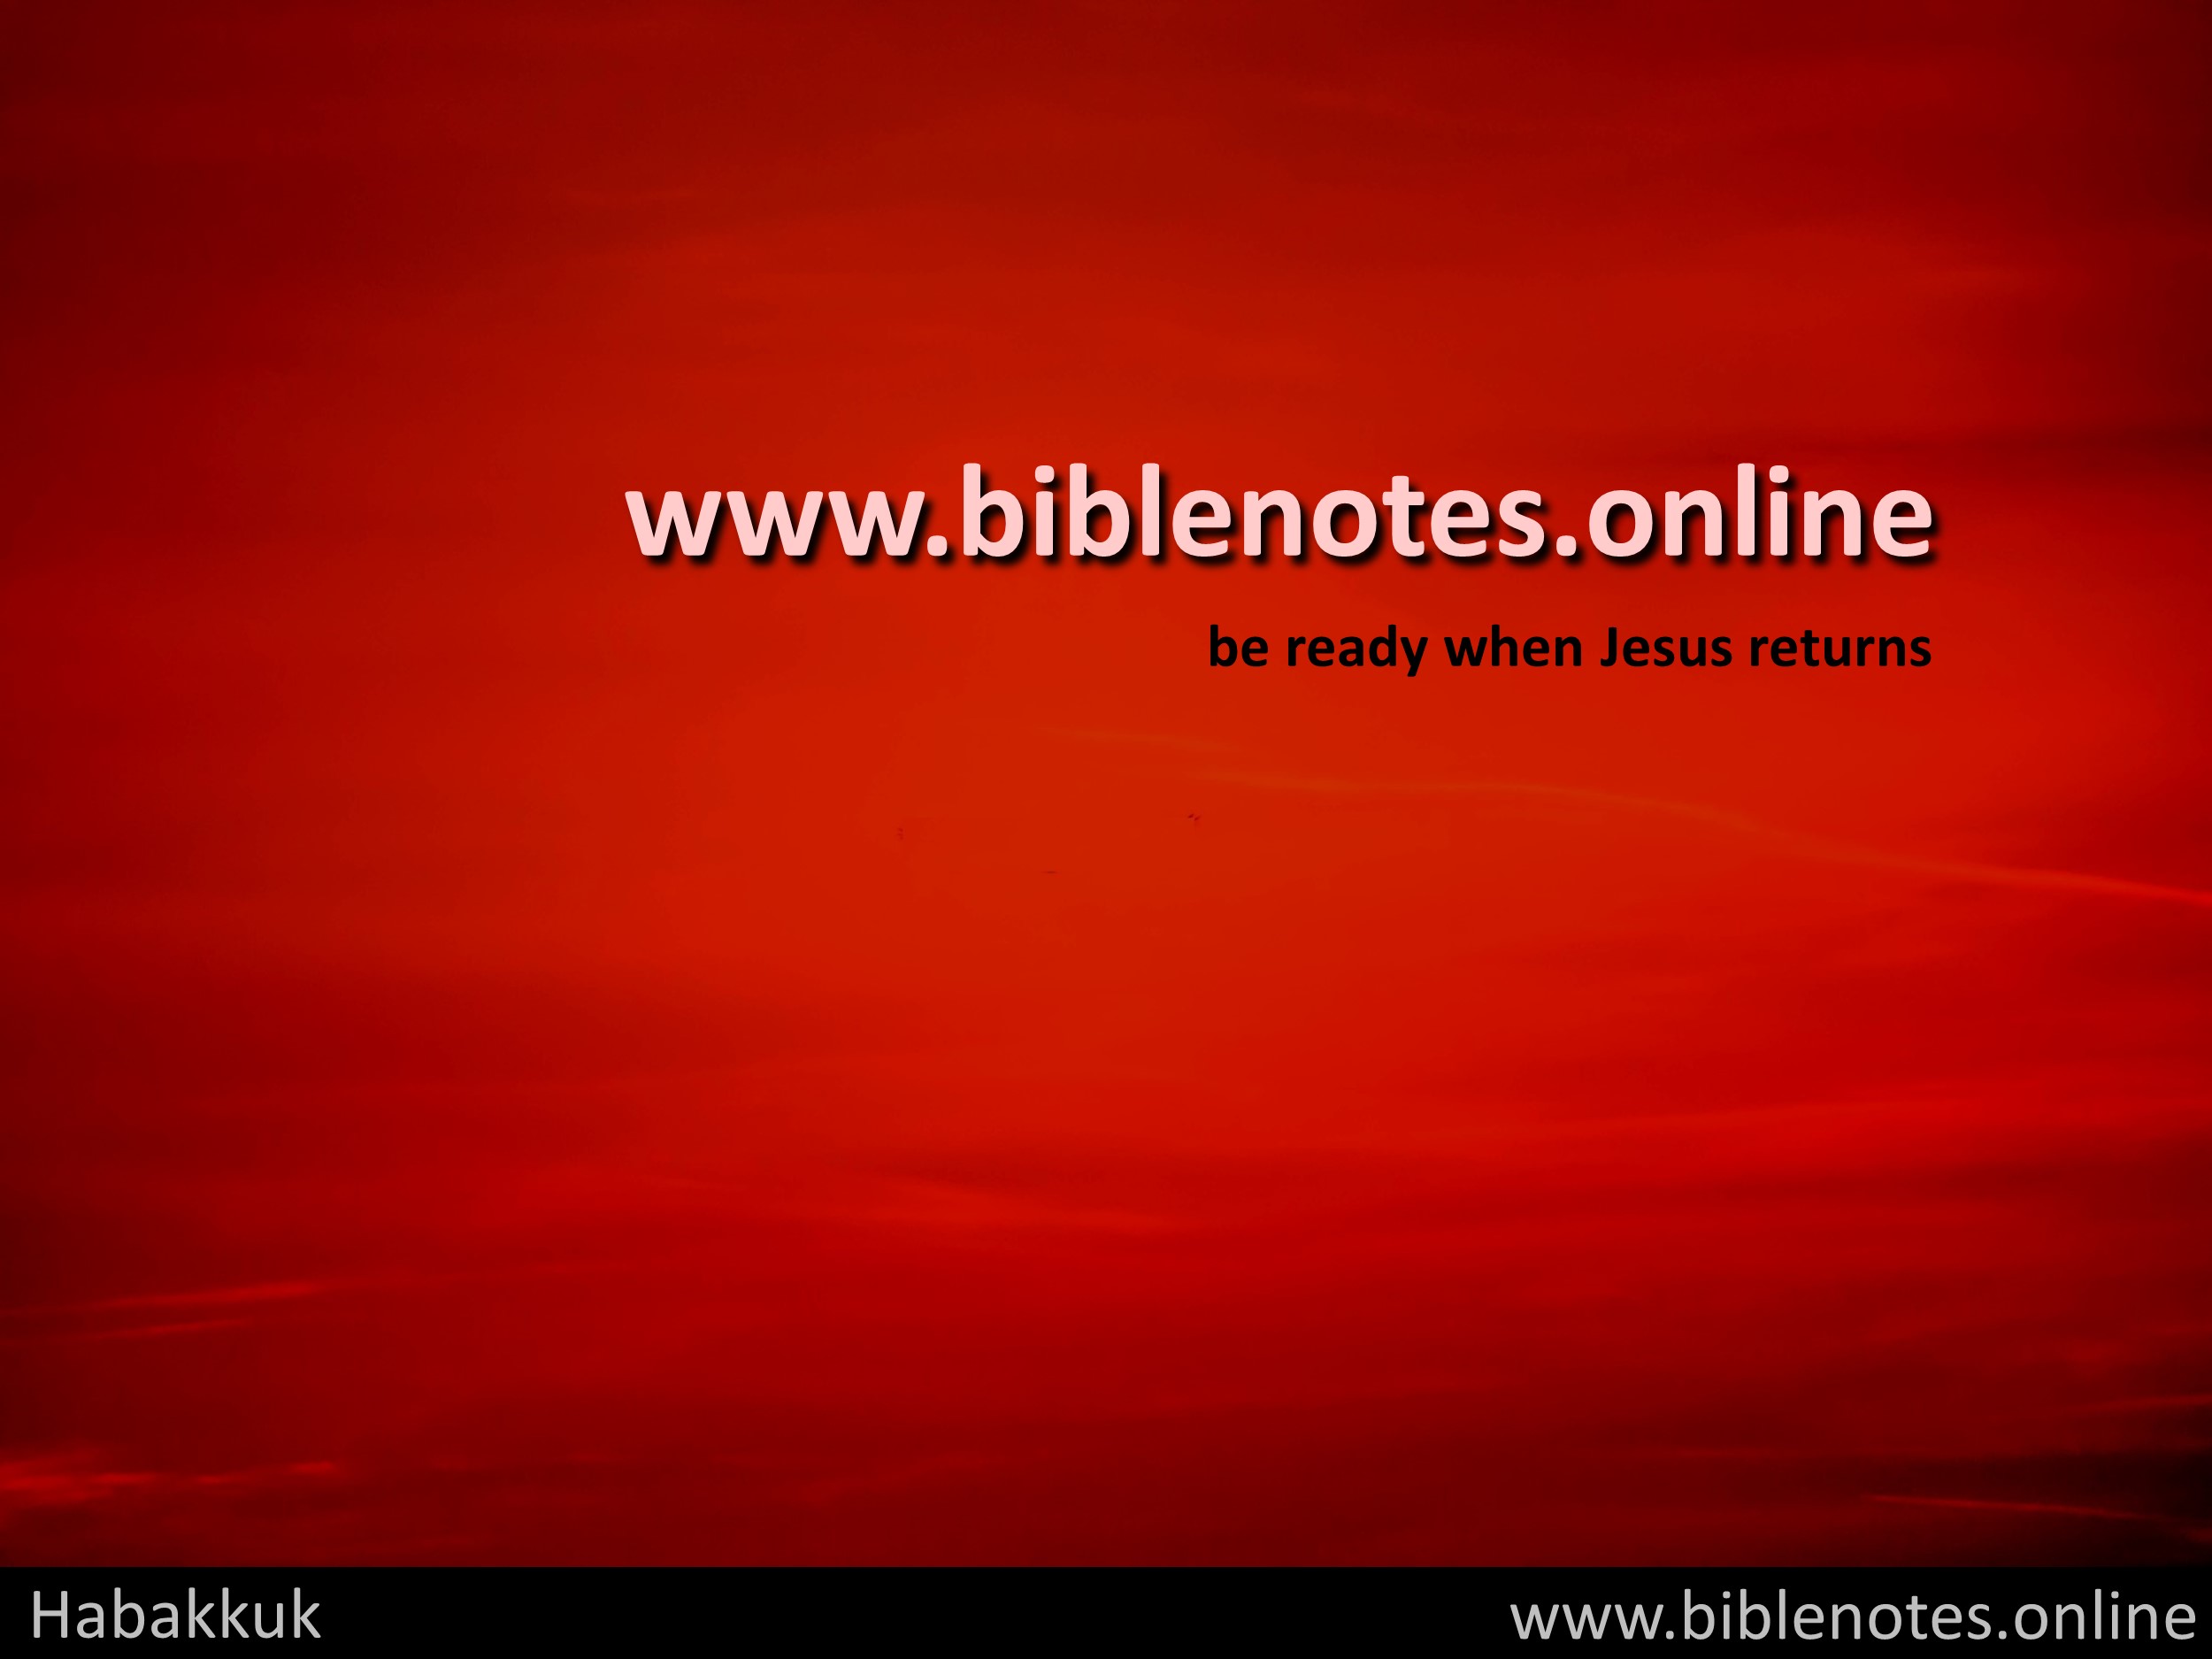 www.biblenotes.online